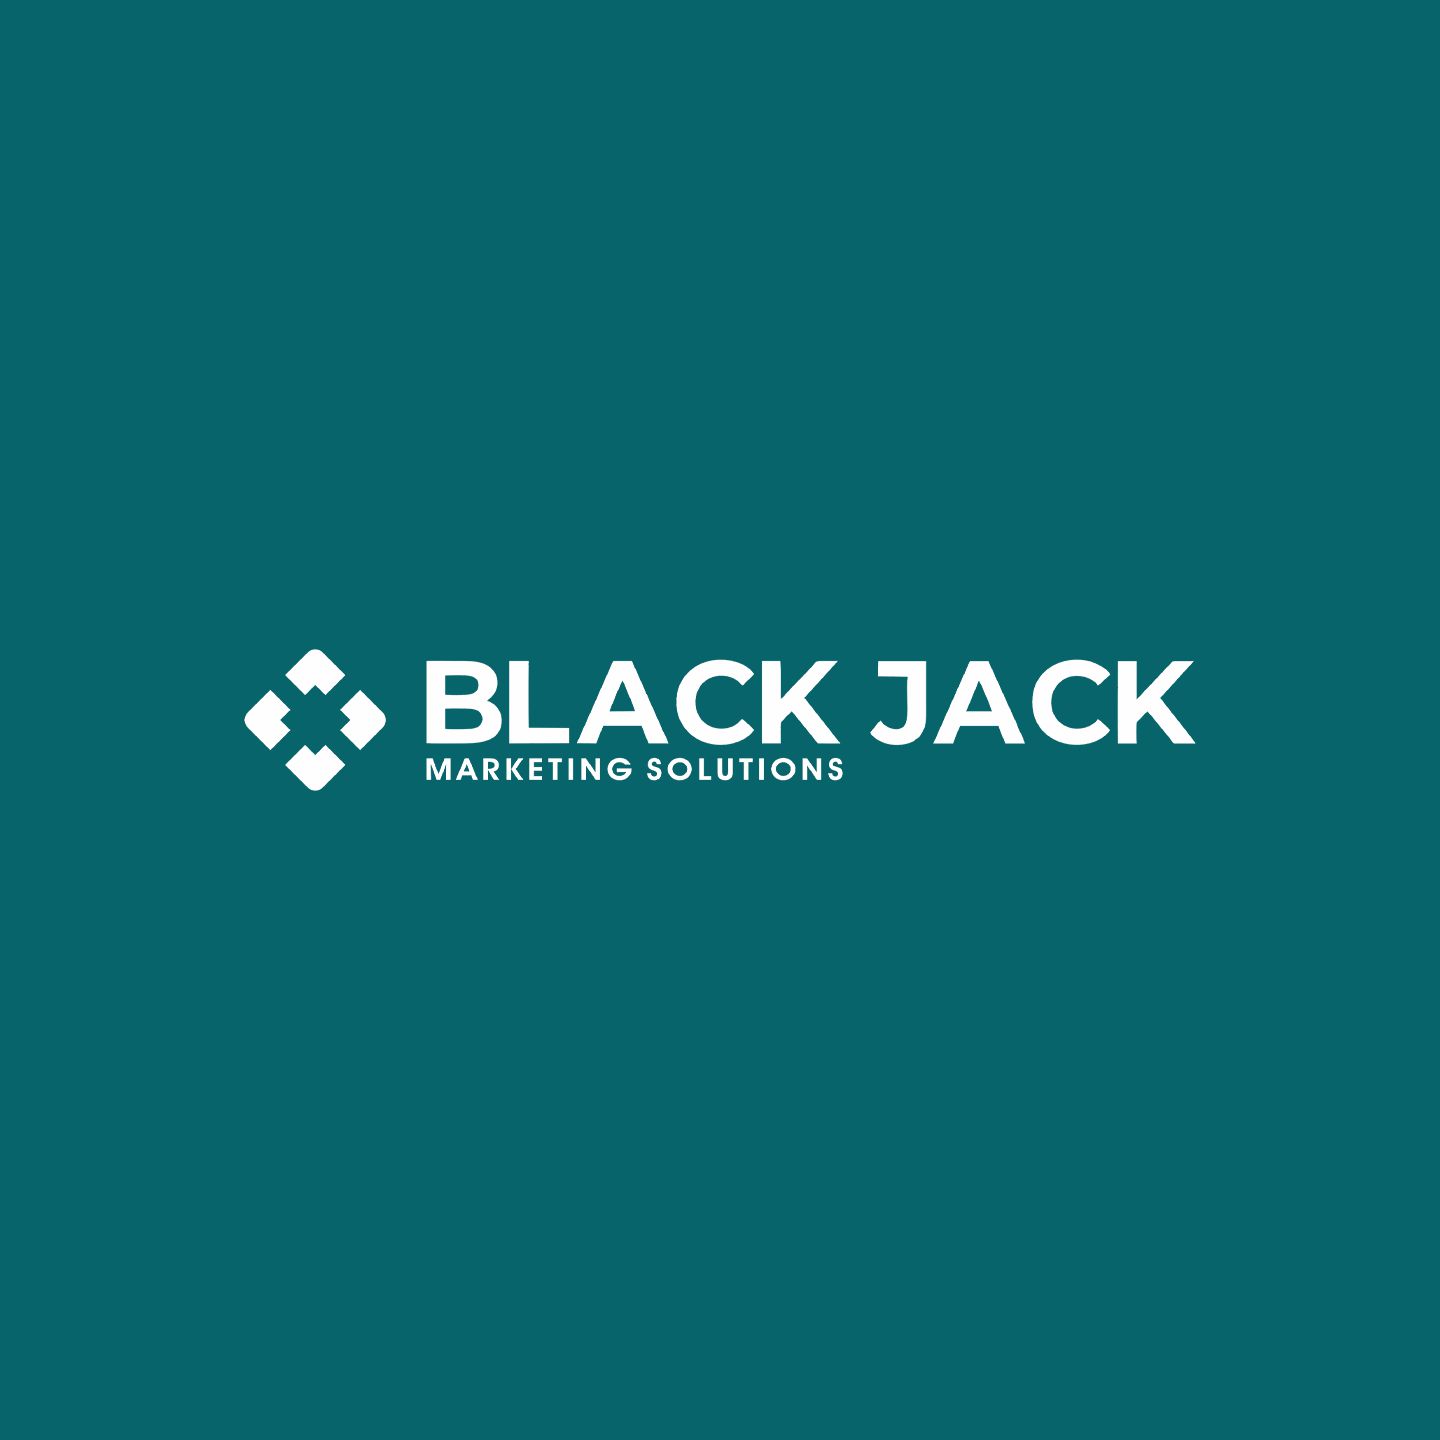 Blackjack marketing solutions